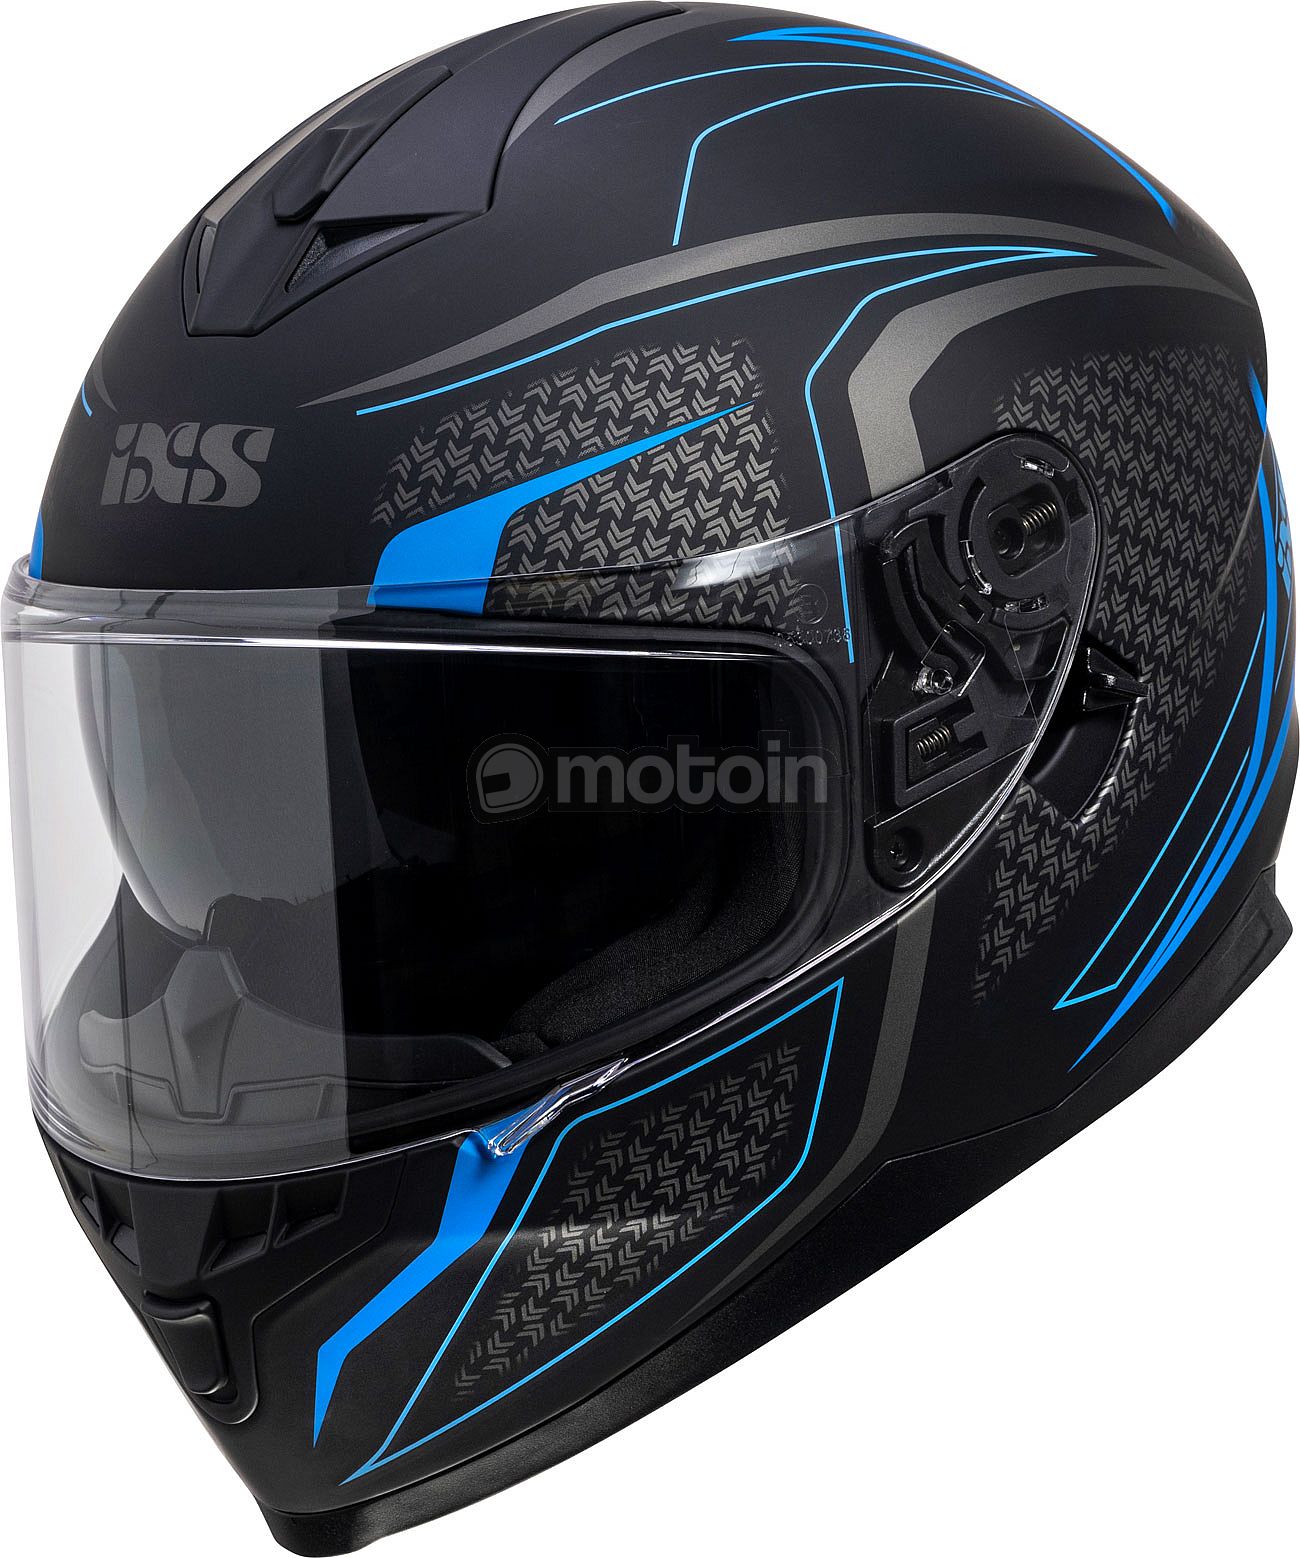 IXS 1100 2.4, integral helmet - motoin.de